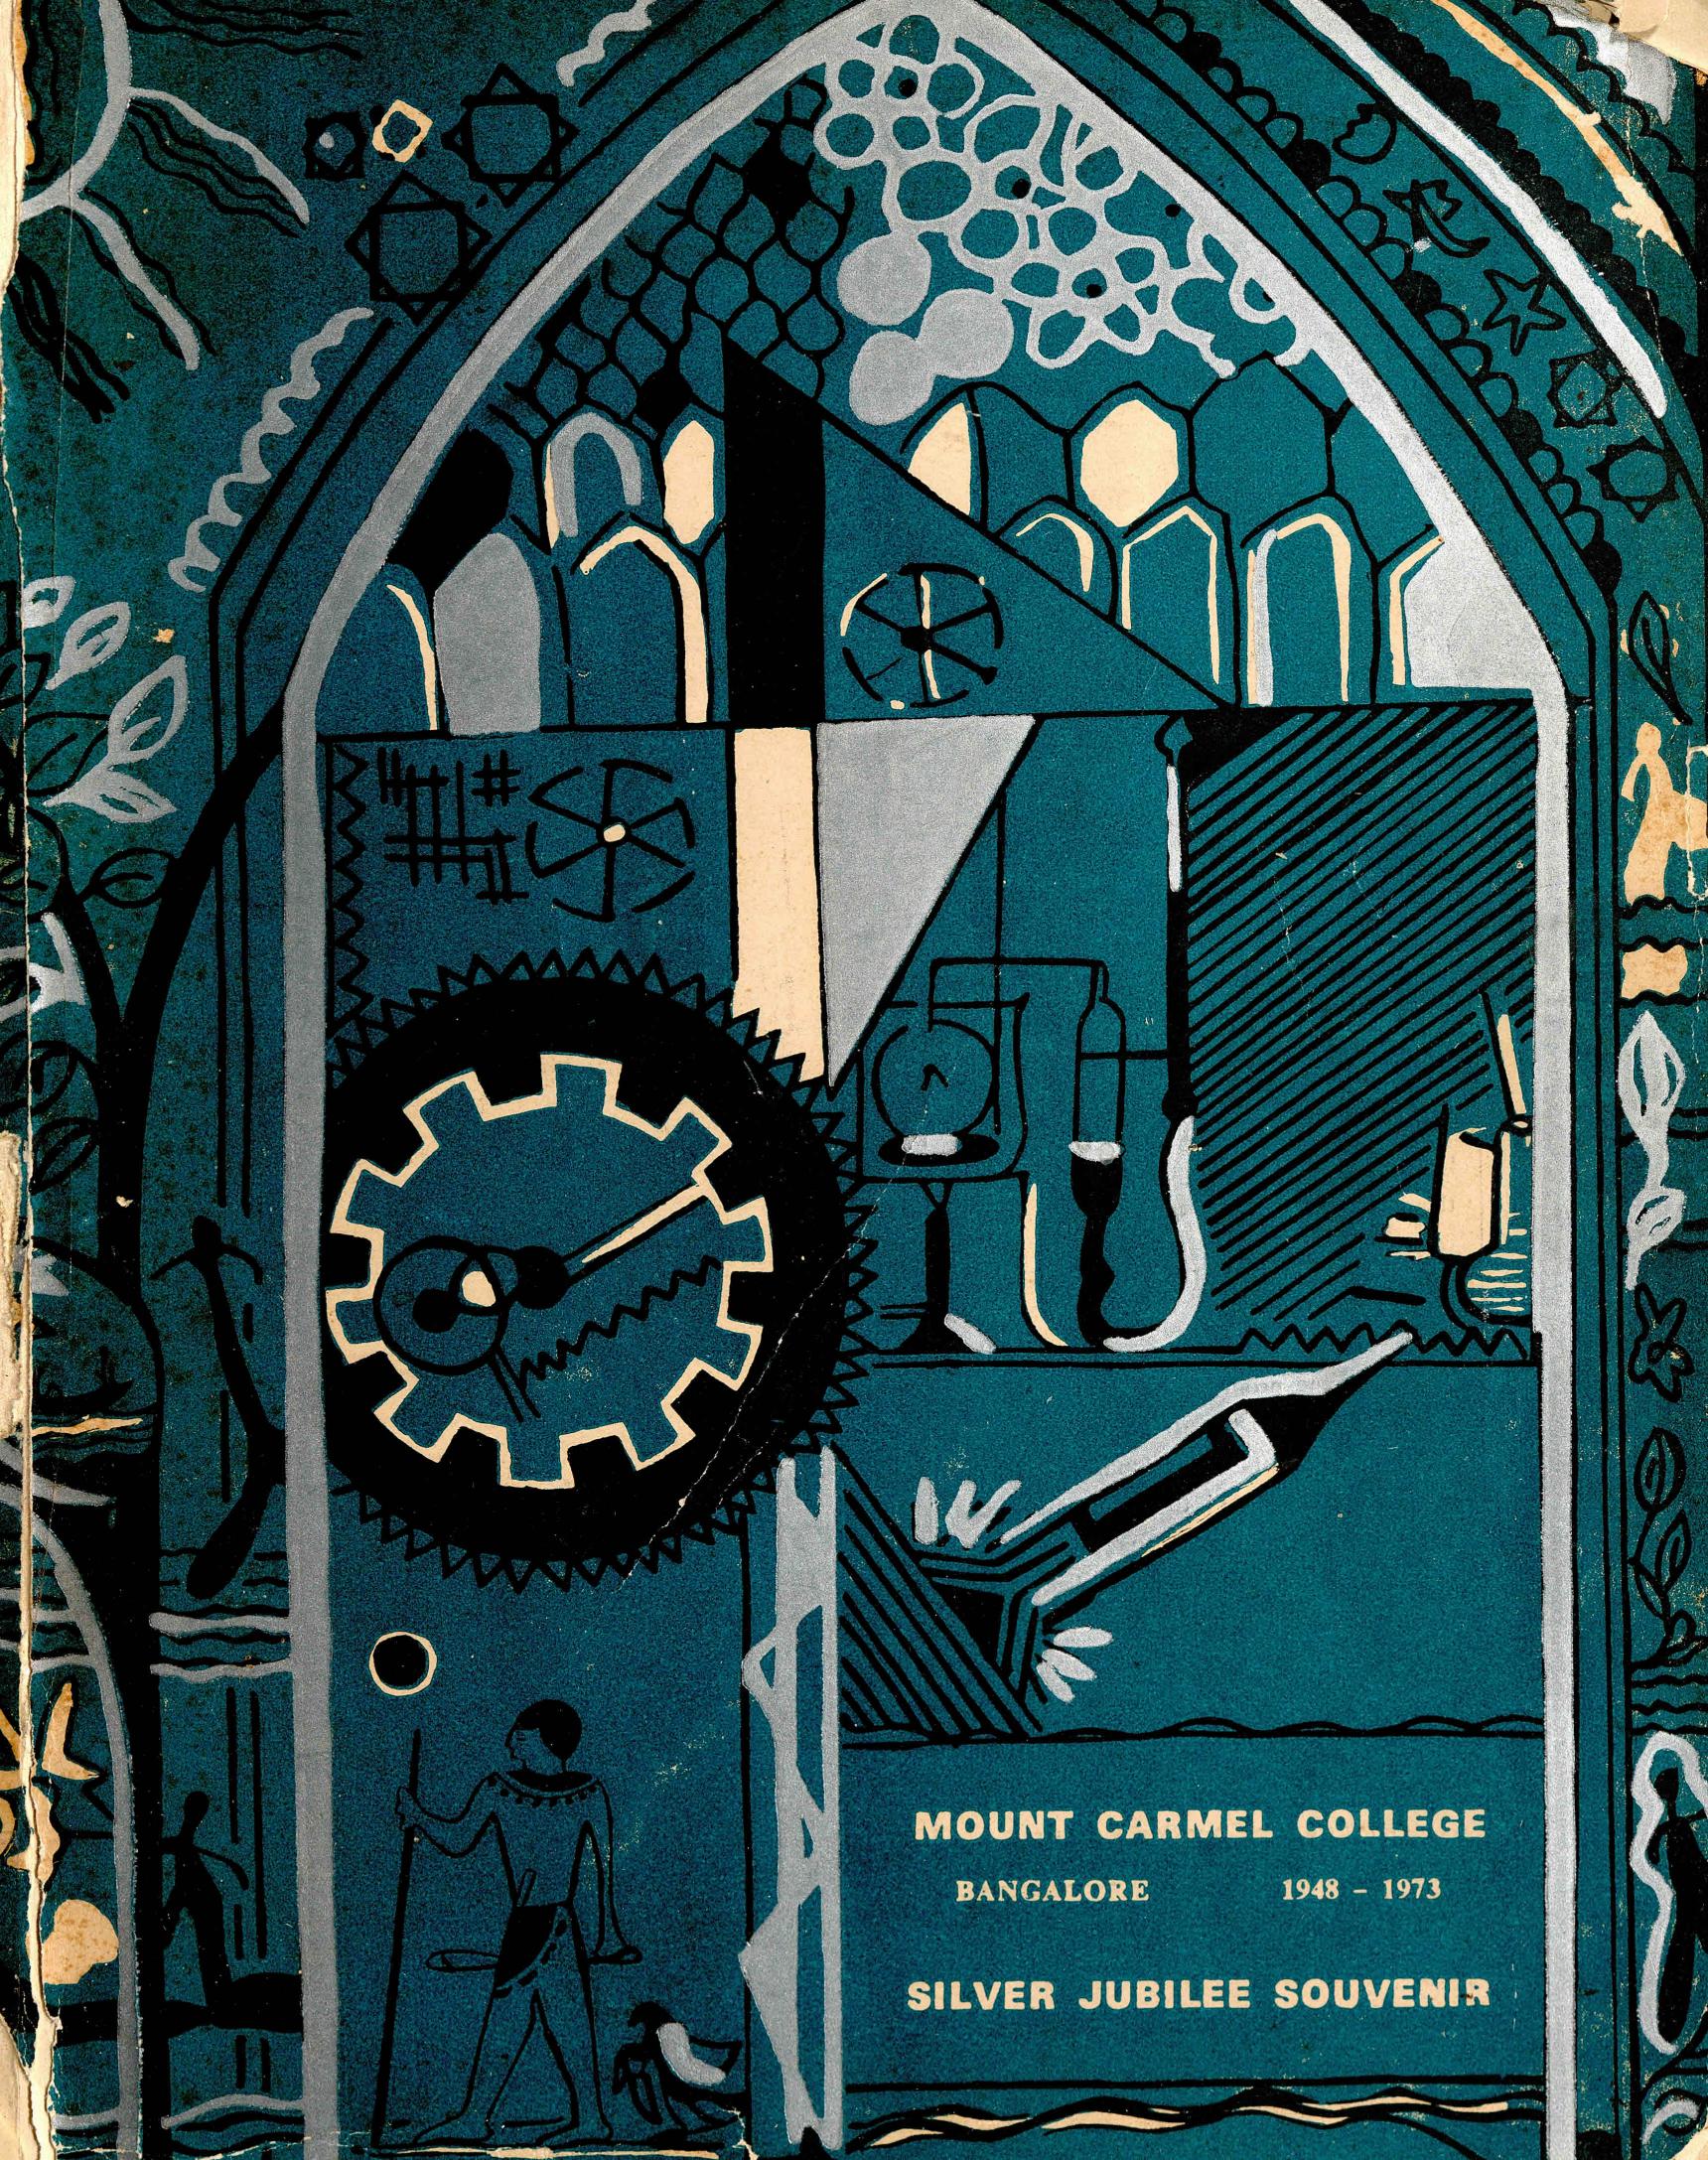  1973 - Mount Carmel College Silver Jubilee Souvenir